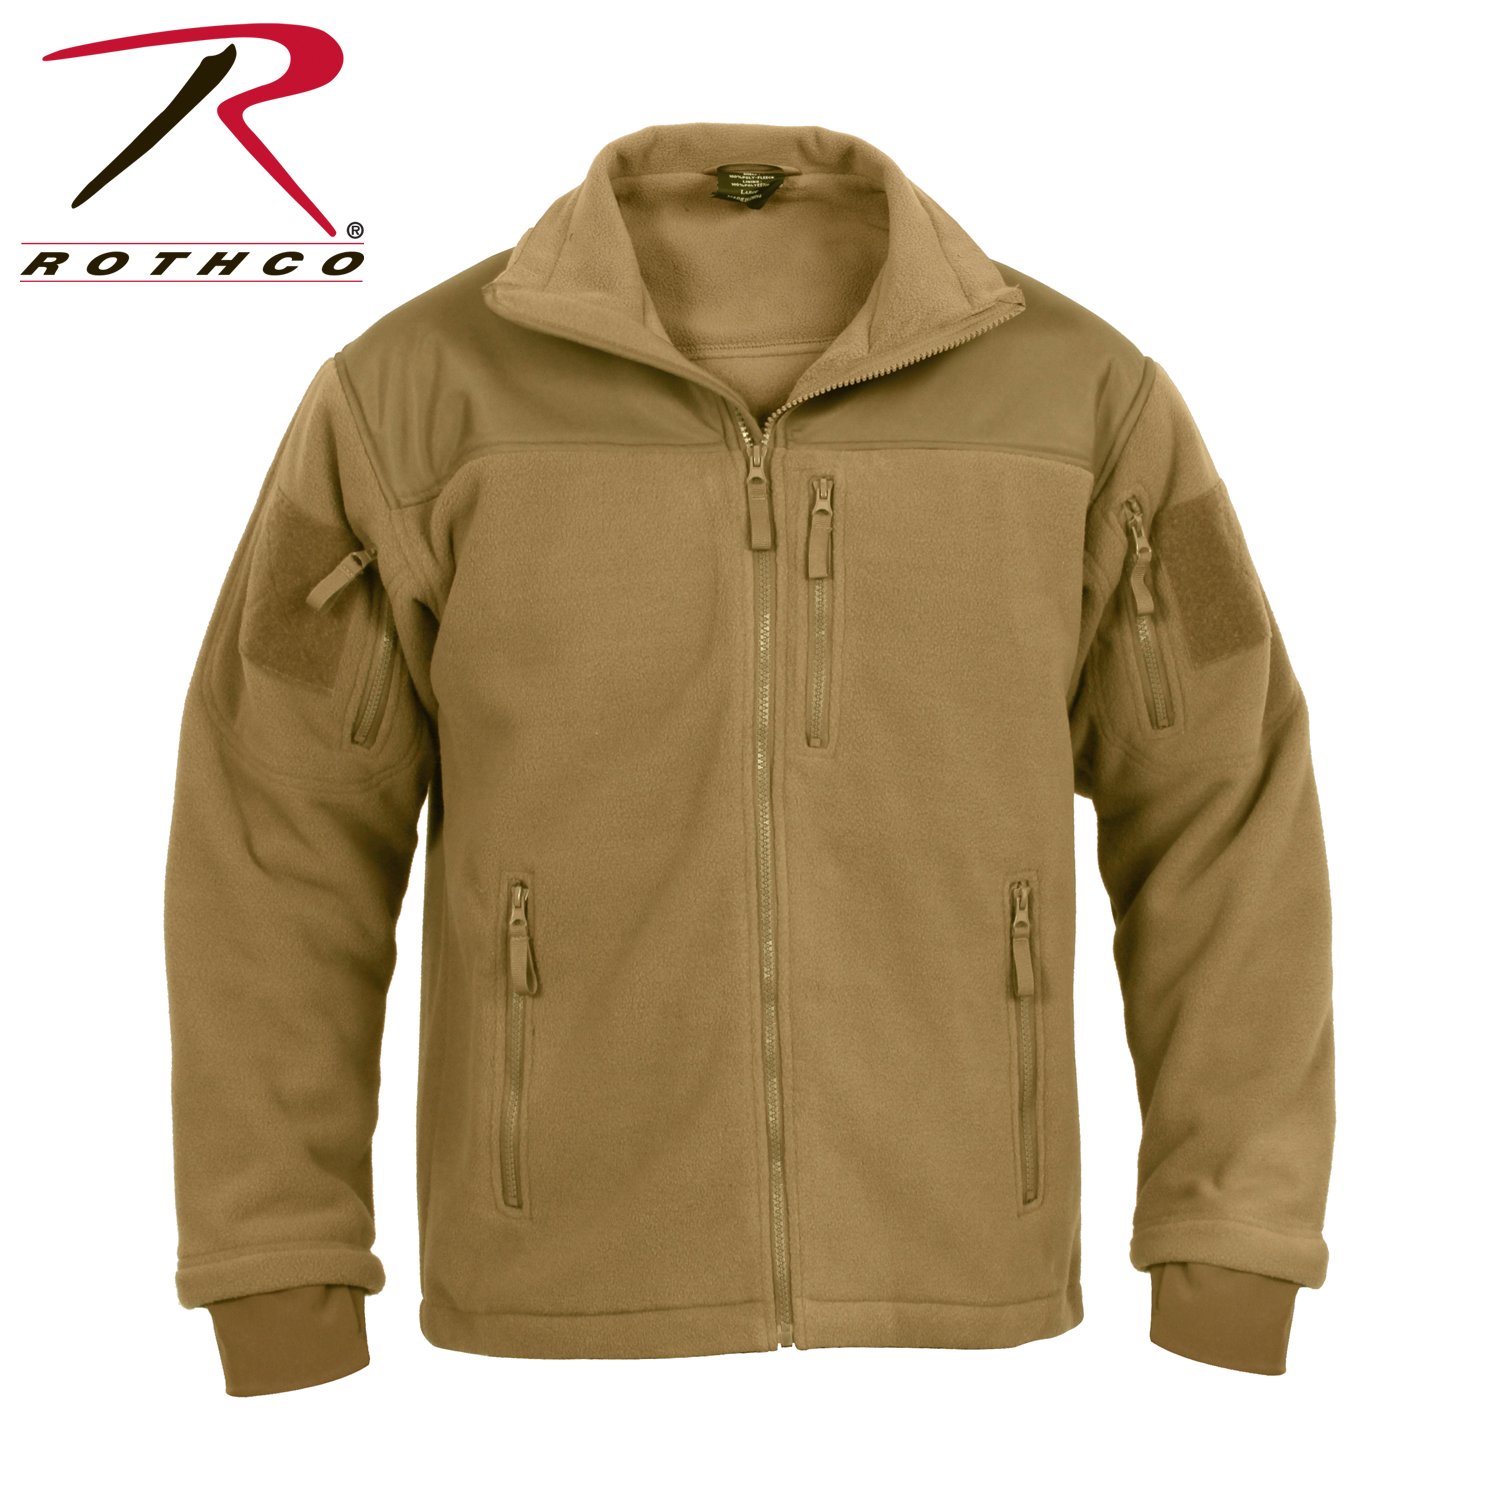 SZ X Large Rothco Spec Ops Tactical Fleece Jacket 96680